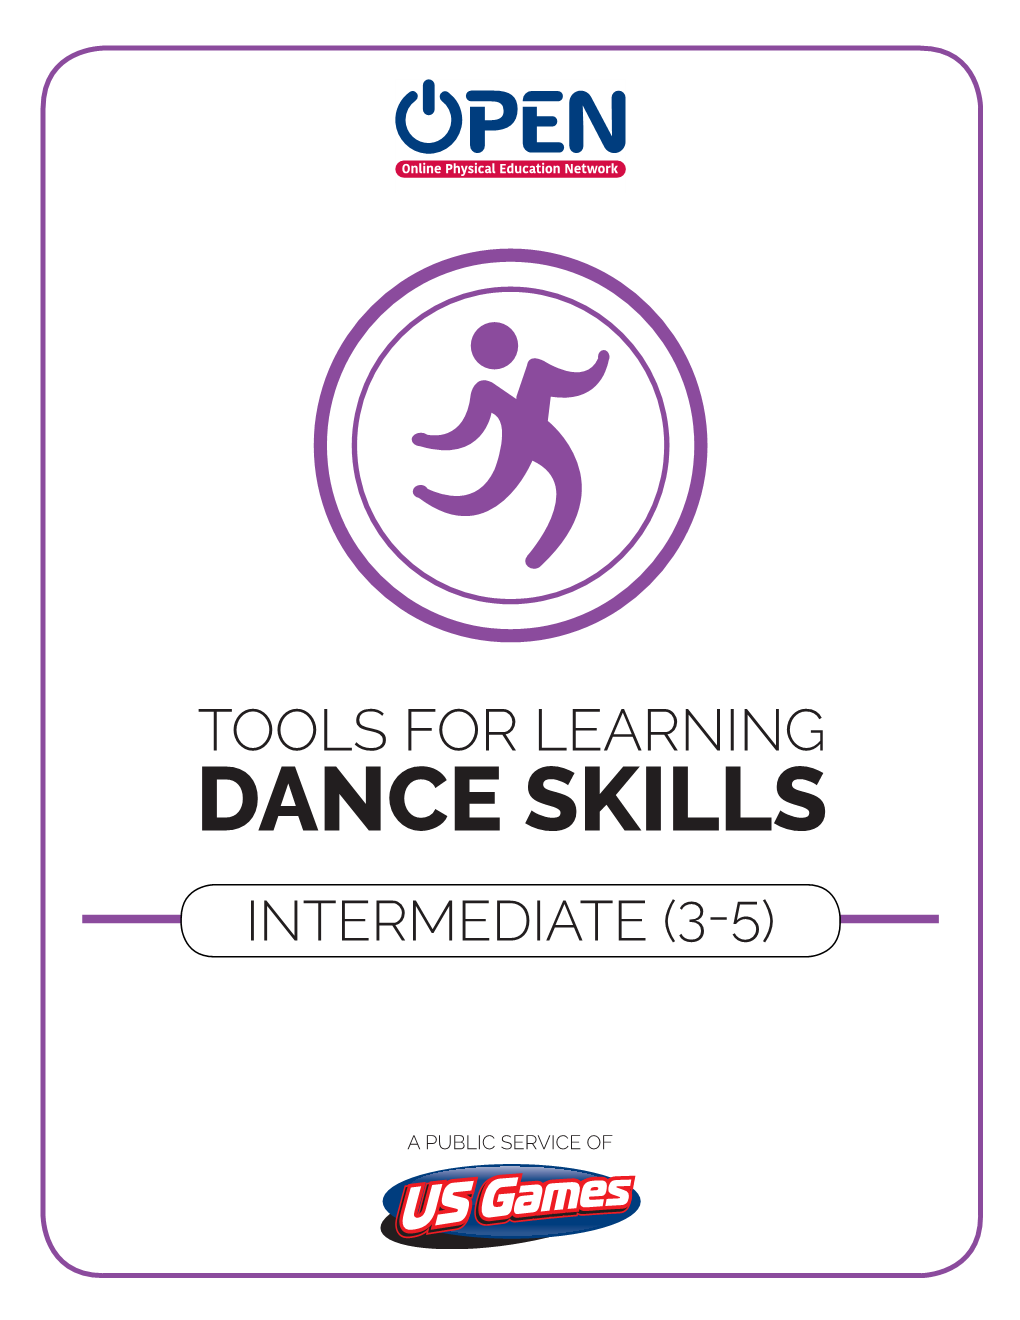 Dance Skills Intermediate (3-5)